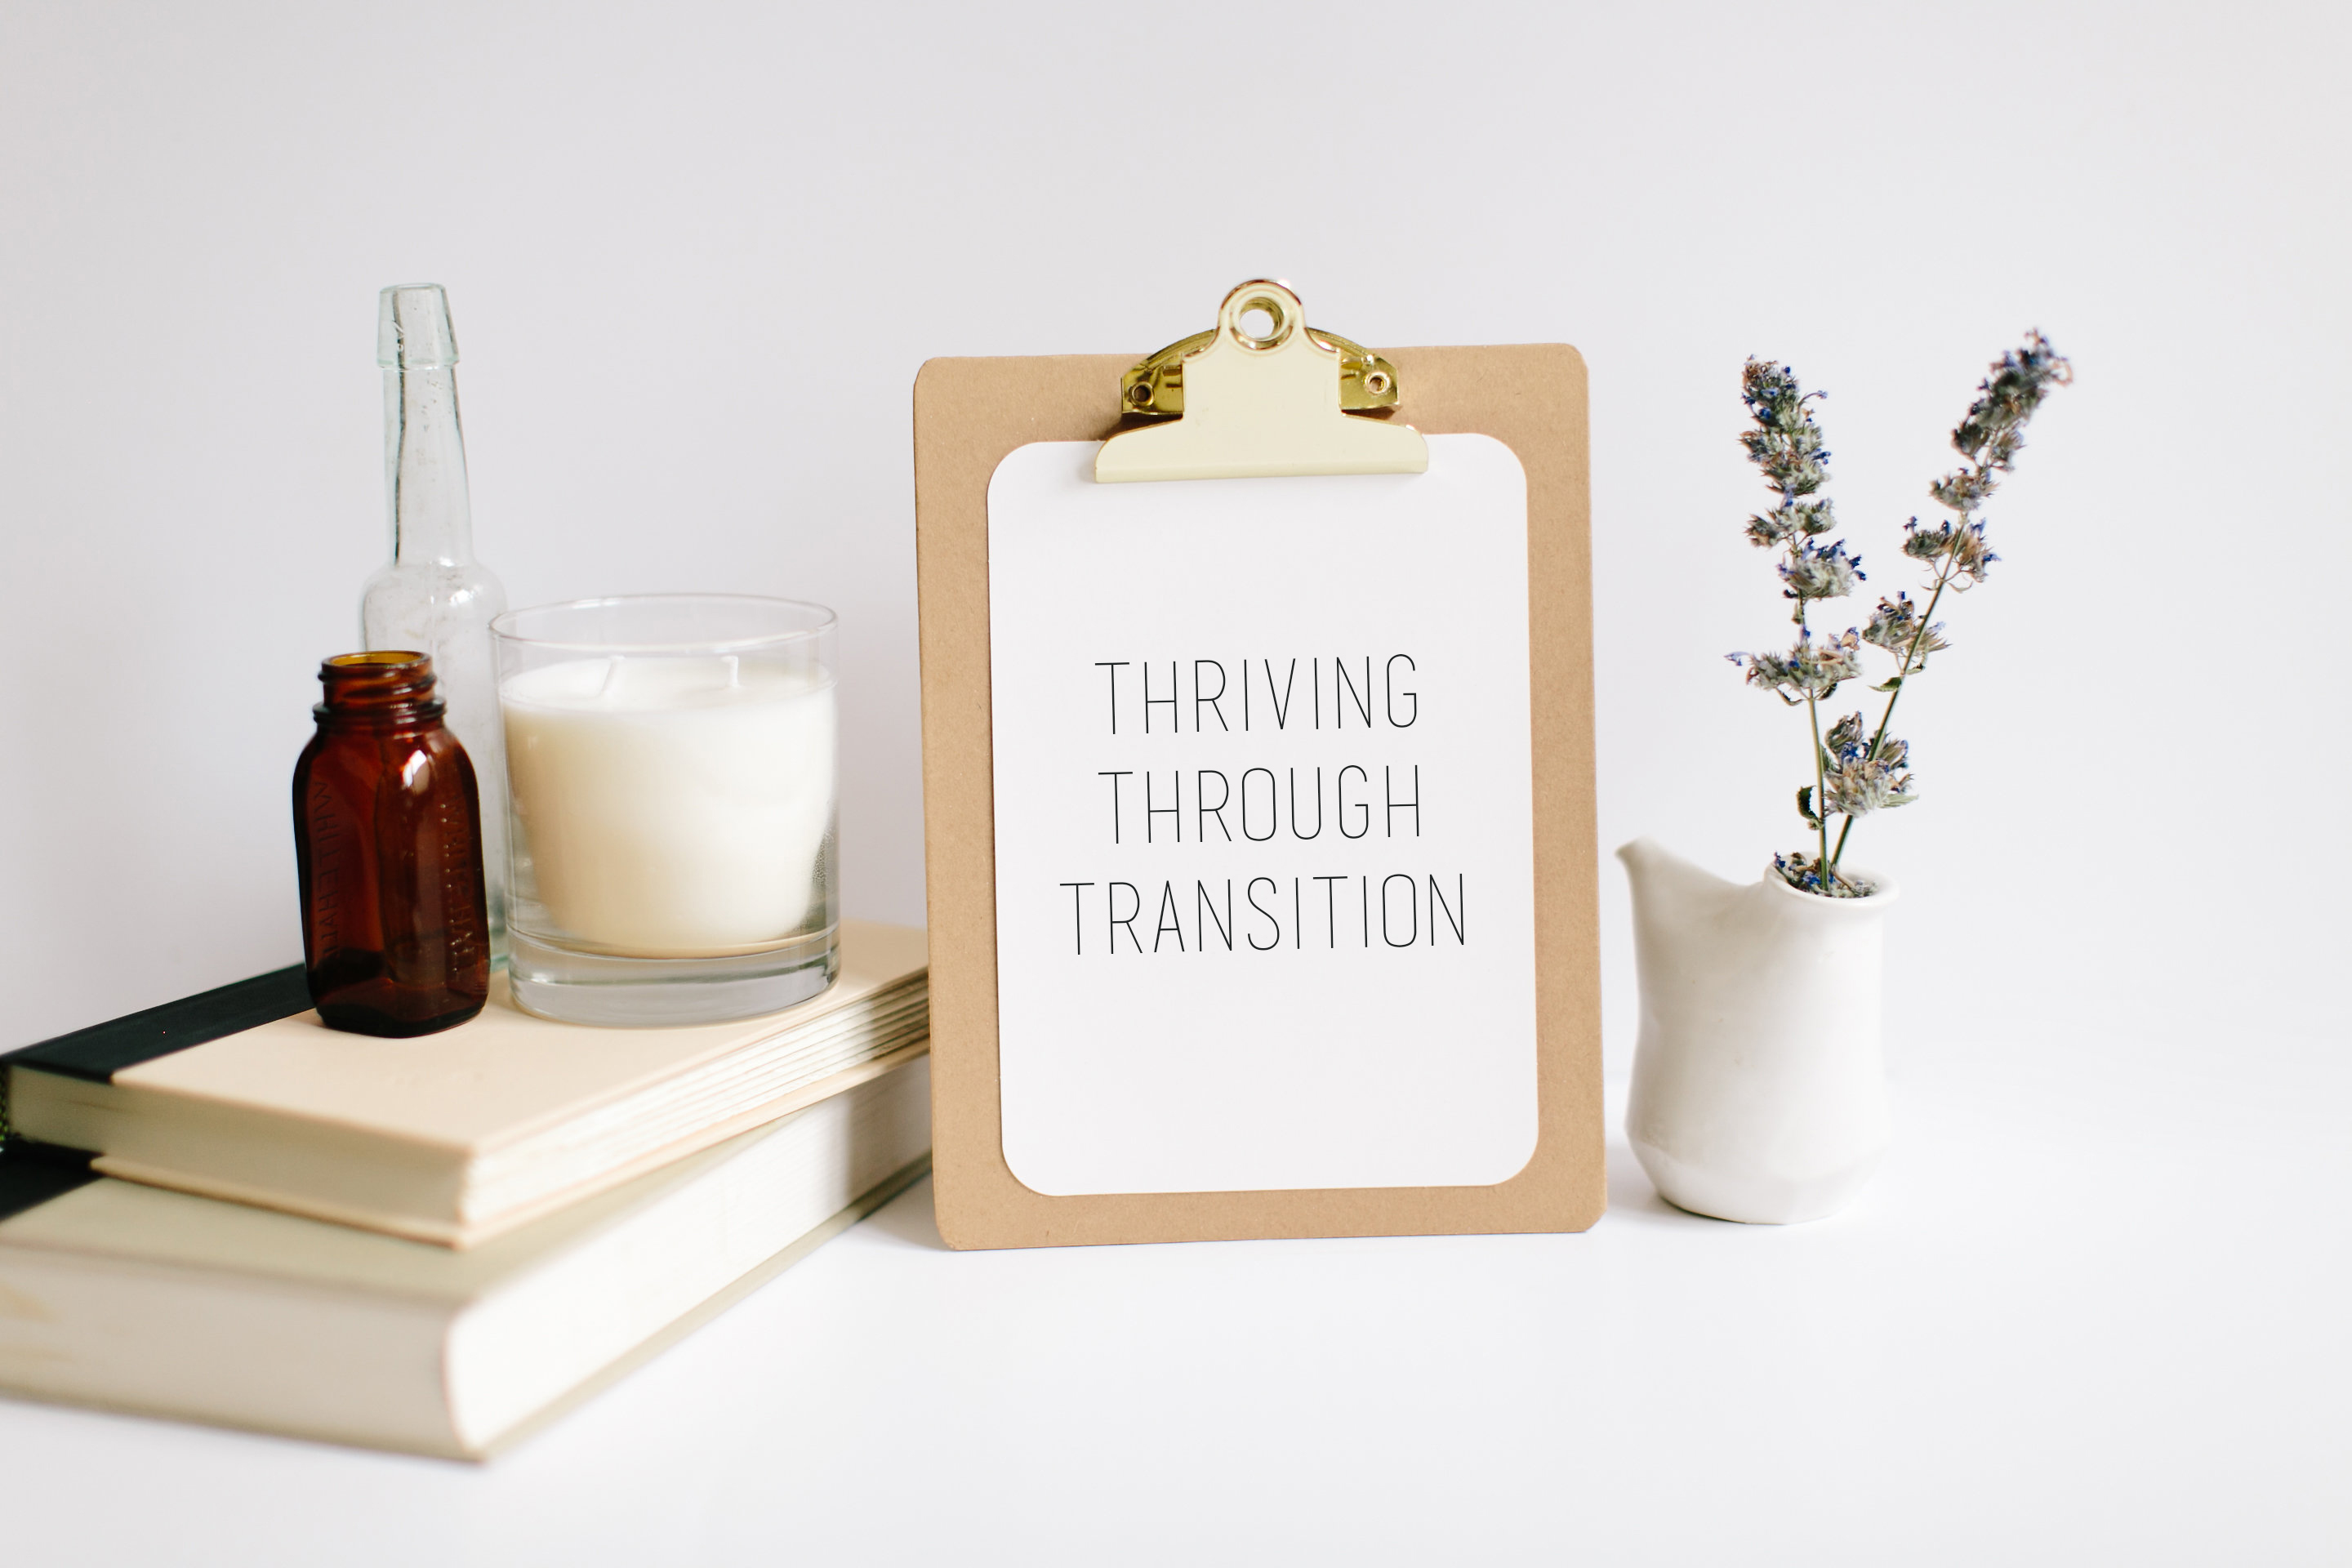 Thriving Through Transition